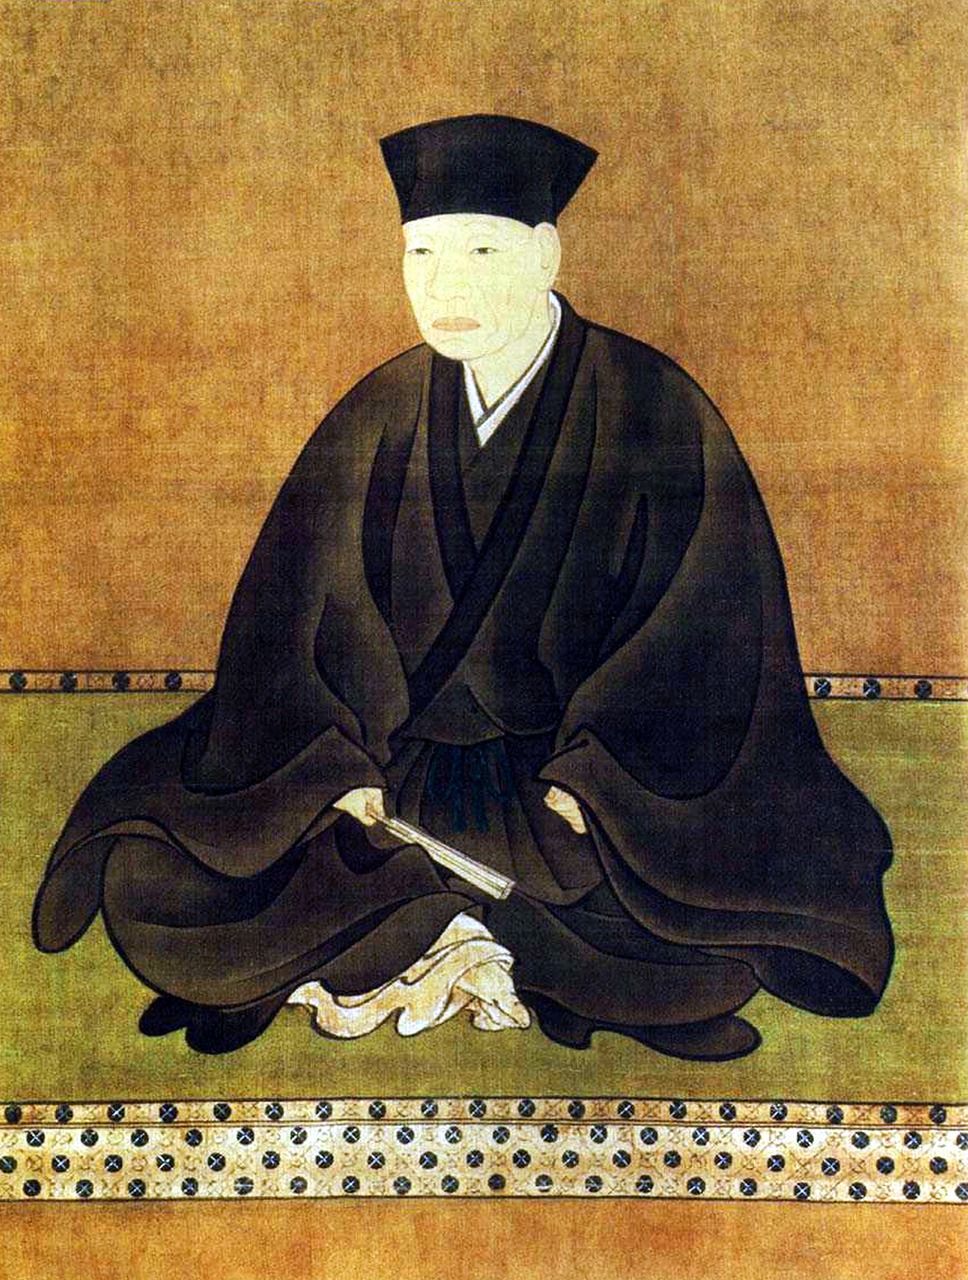 A portrait of Sen no Rikyū by Hasegawa Tōhaku. (© Aflo)